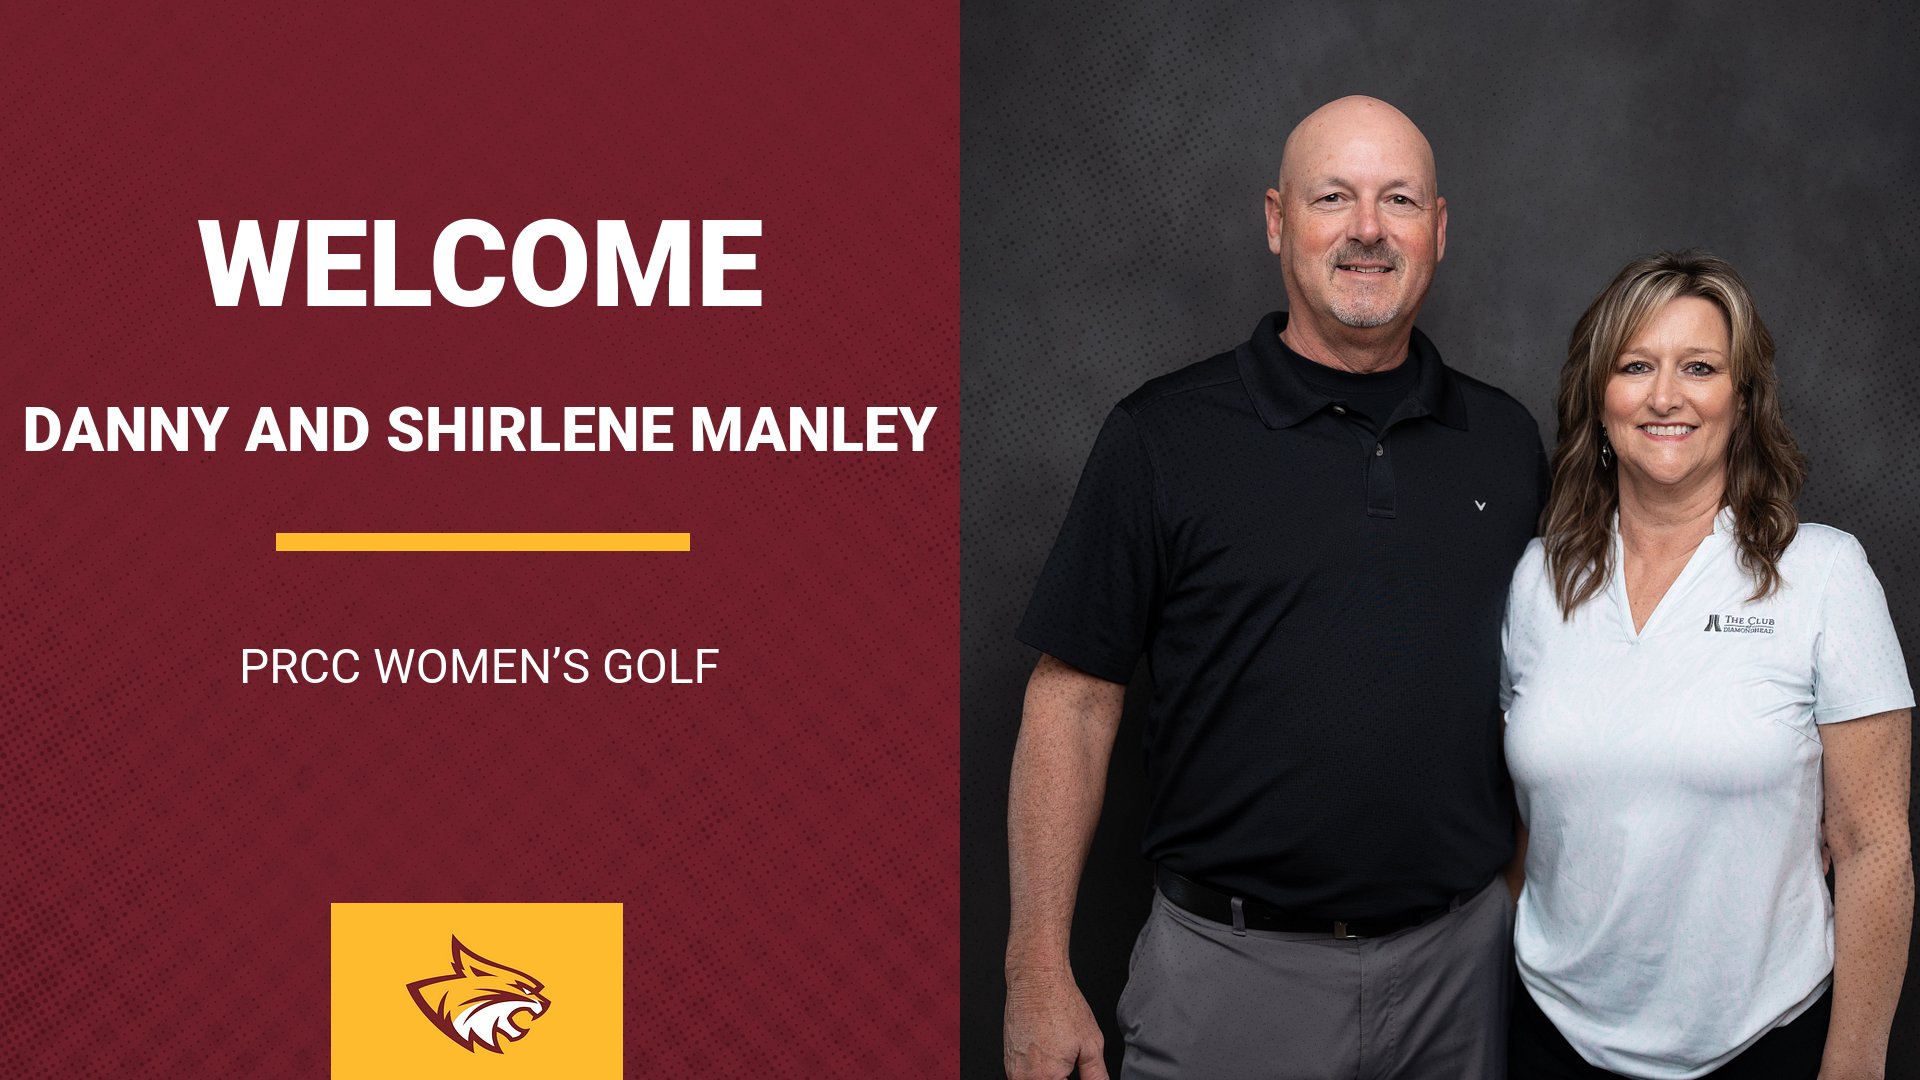 PRCC women's golf coaches - Danny and Shirlene Manley